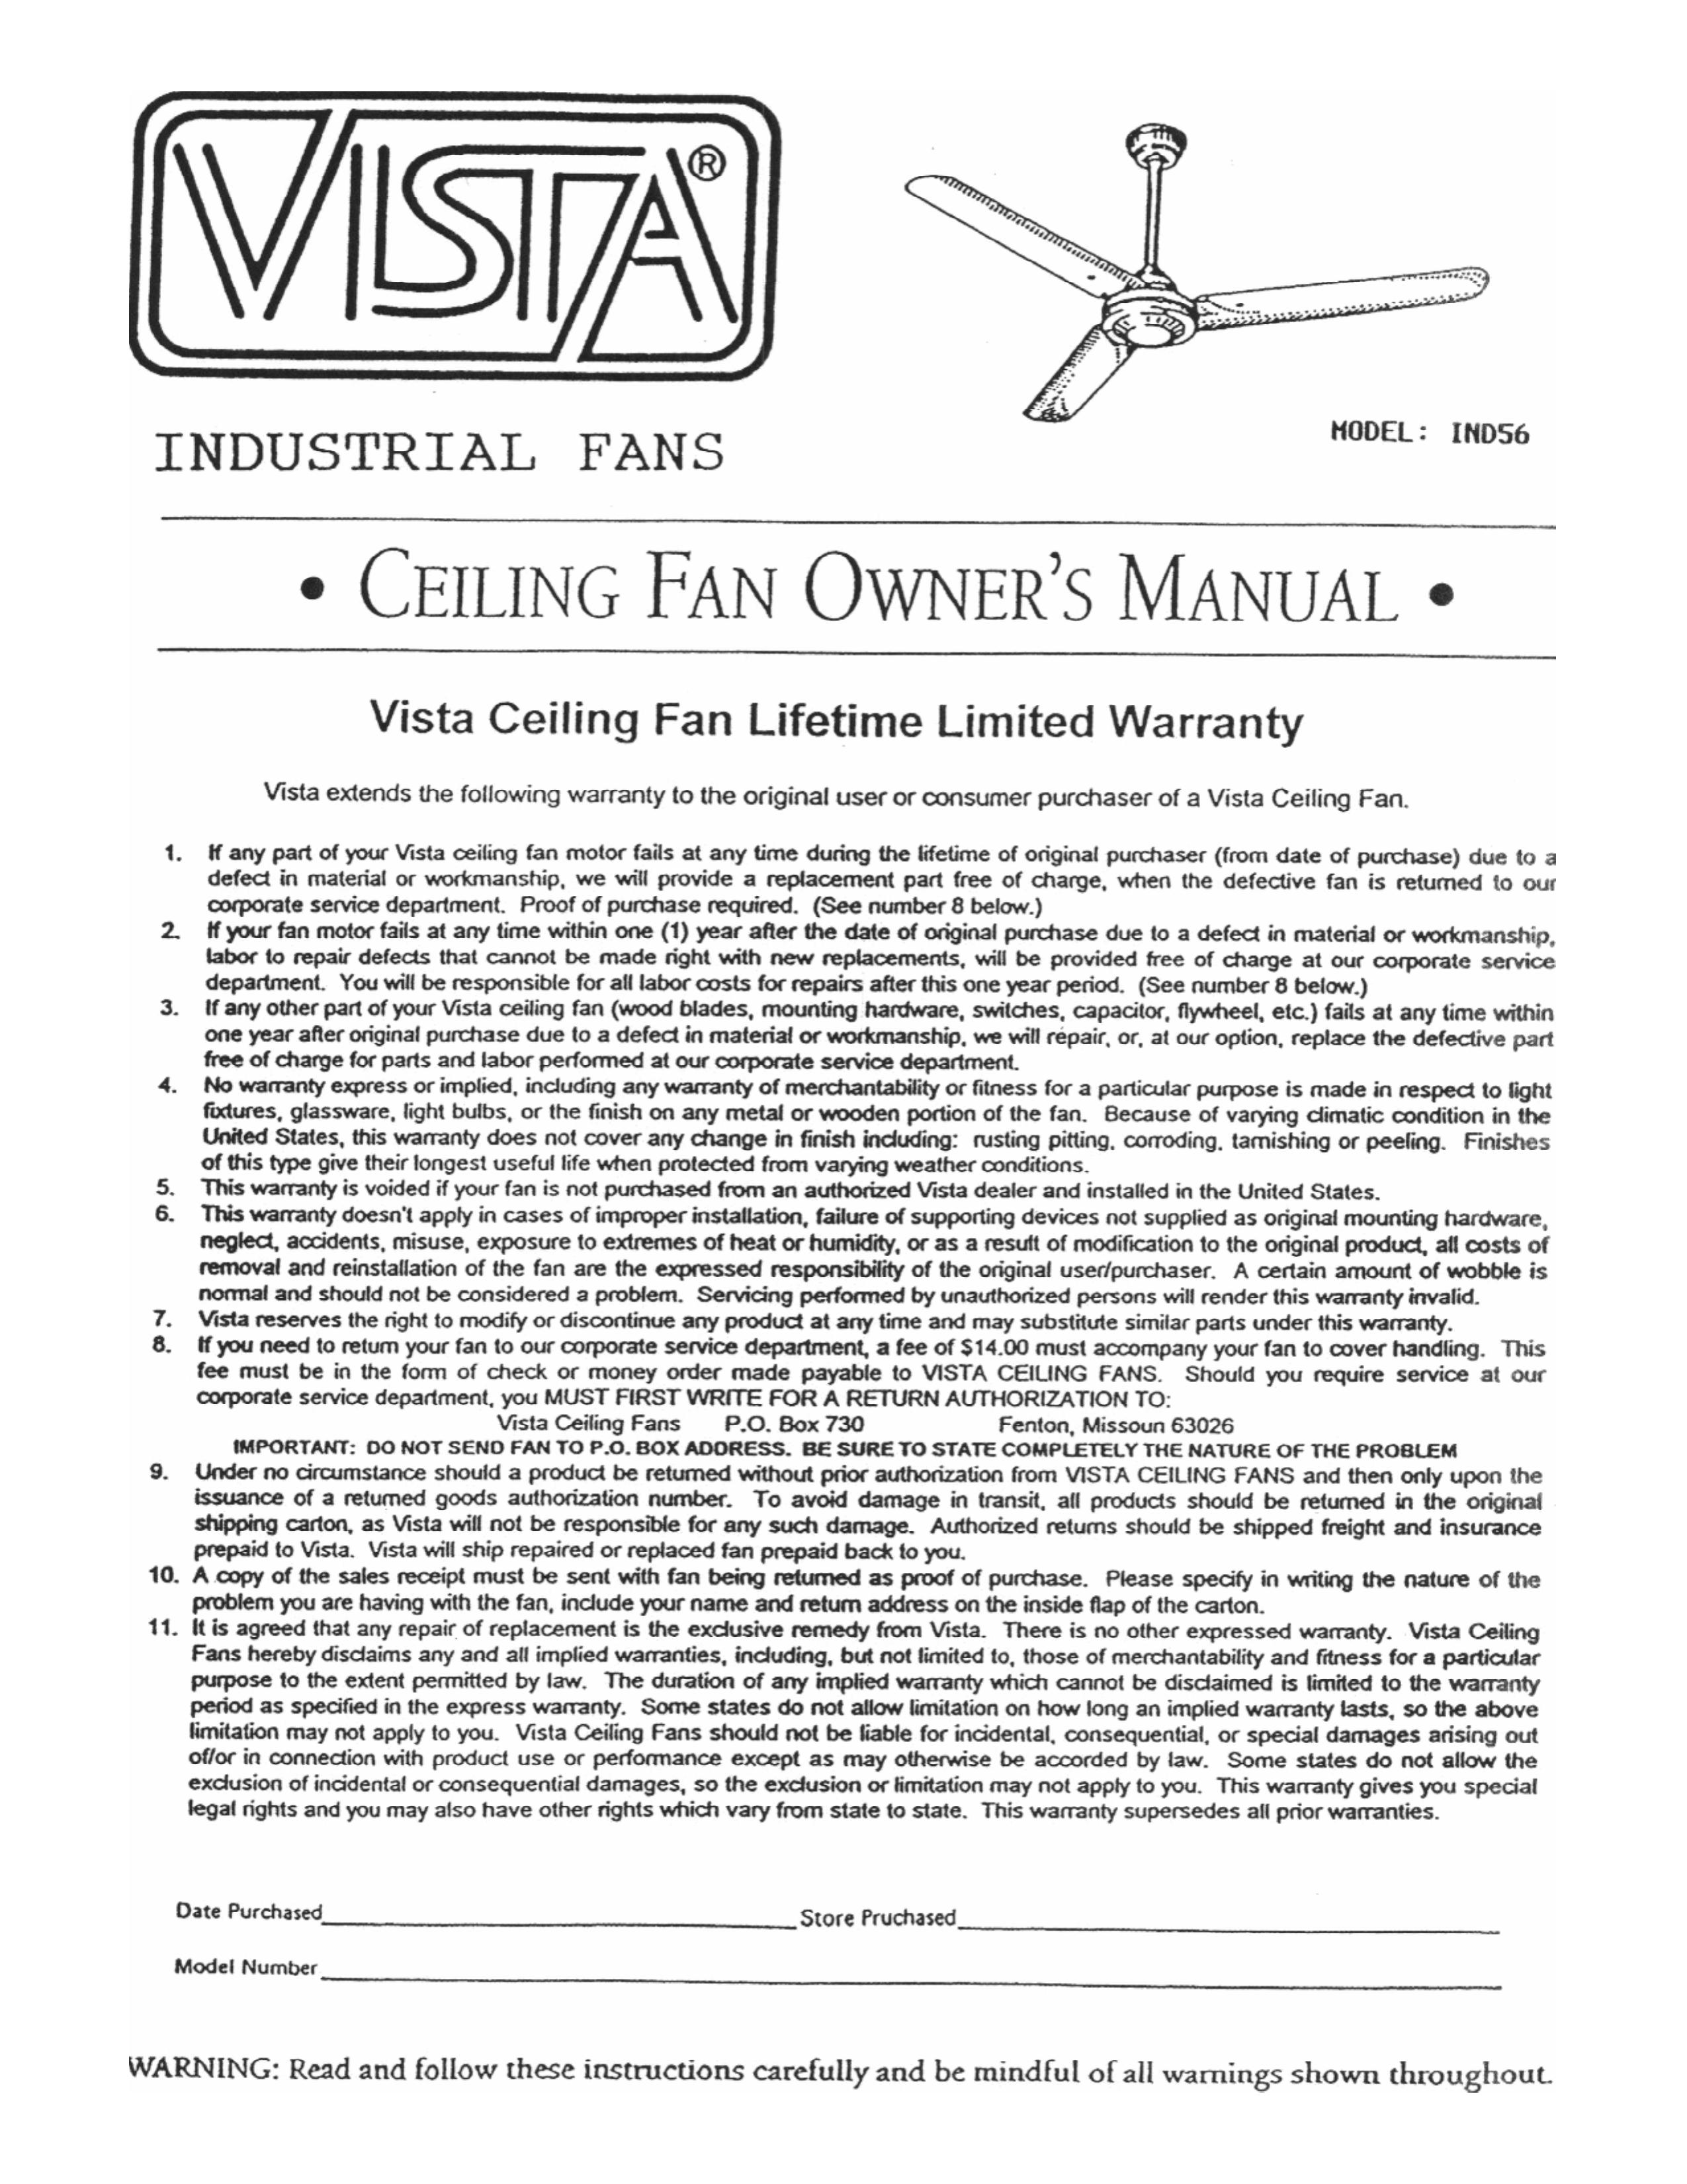 Vista IND56 Outdoor Ceiling Fan User Manual